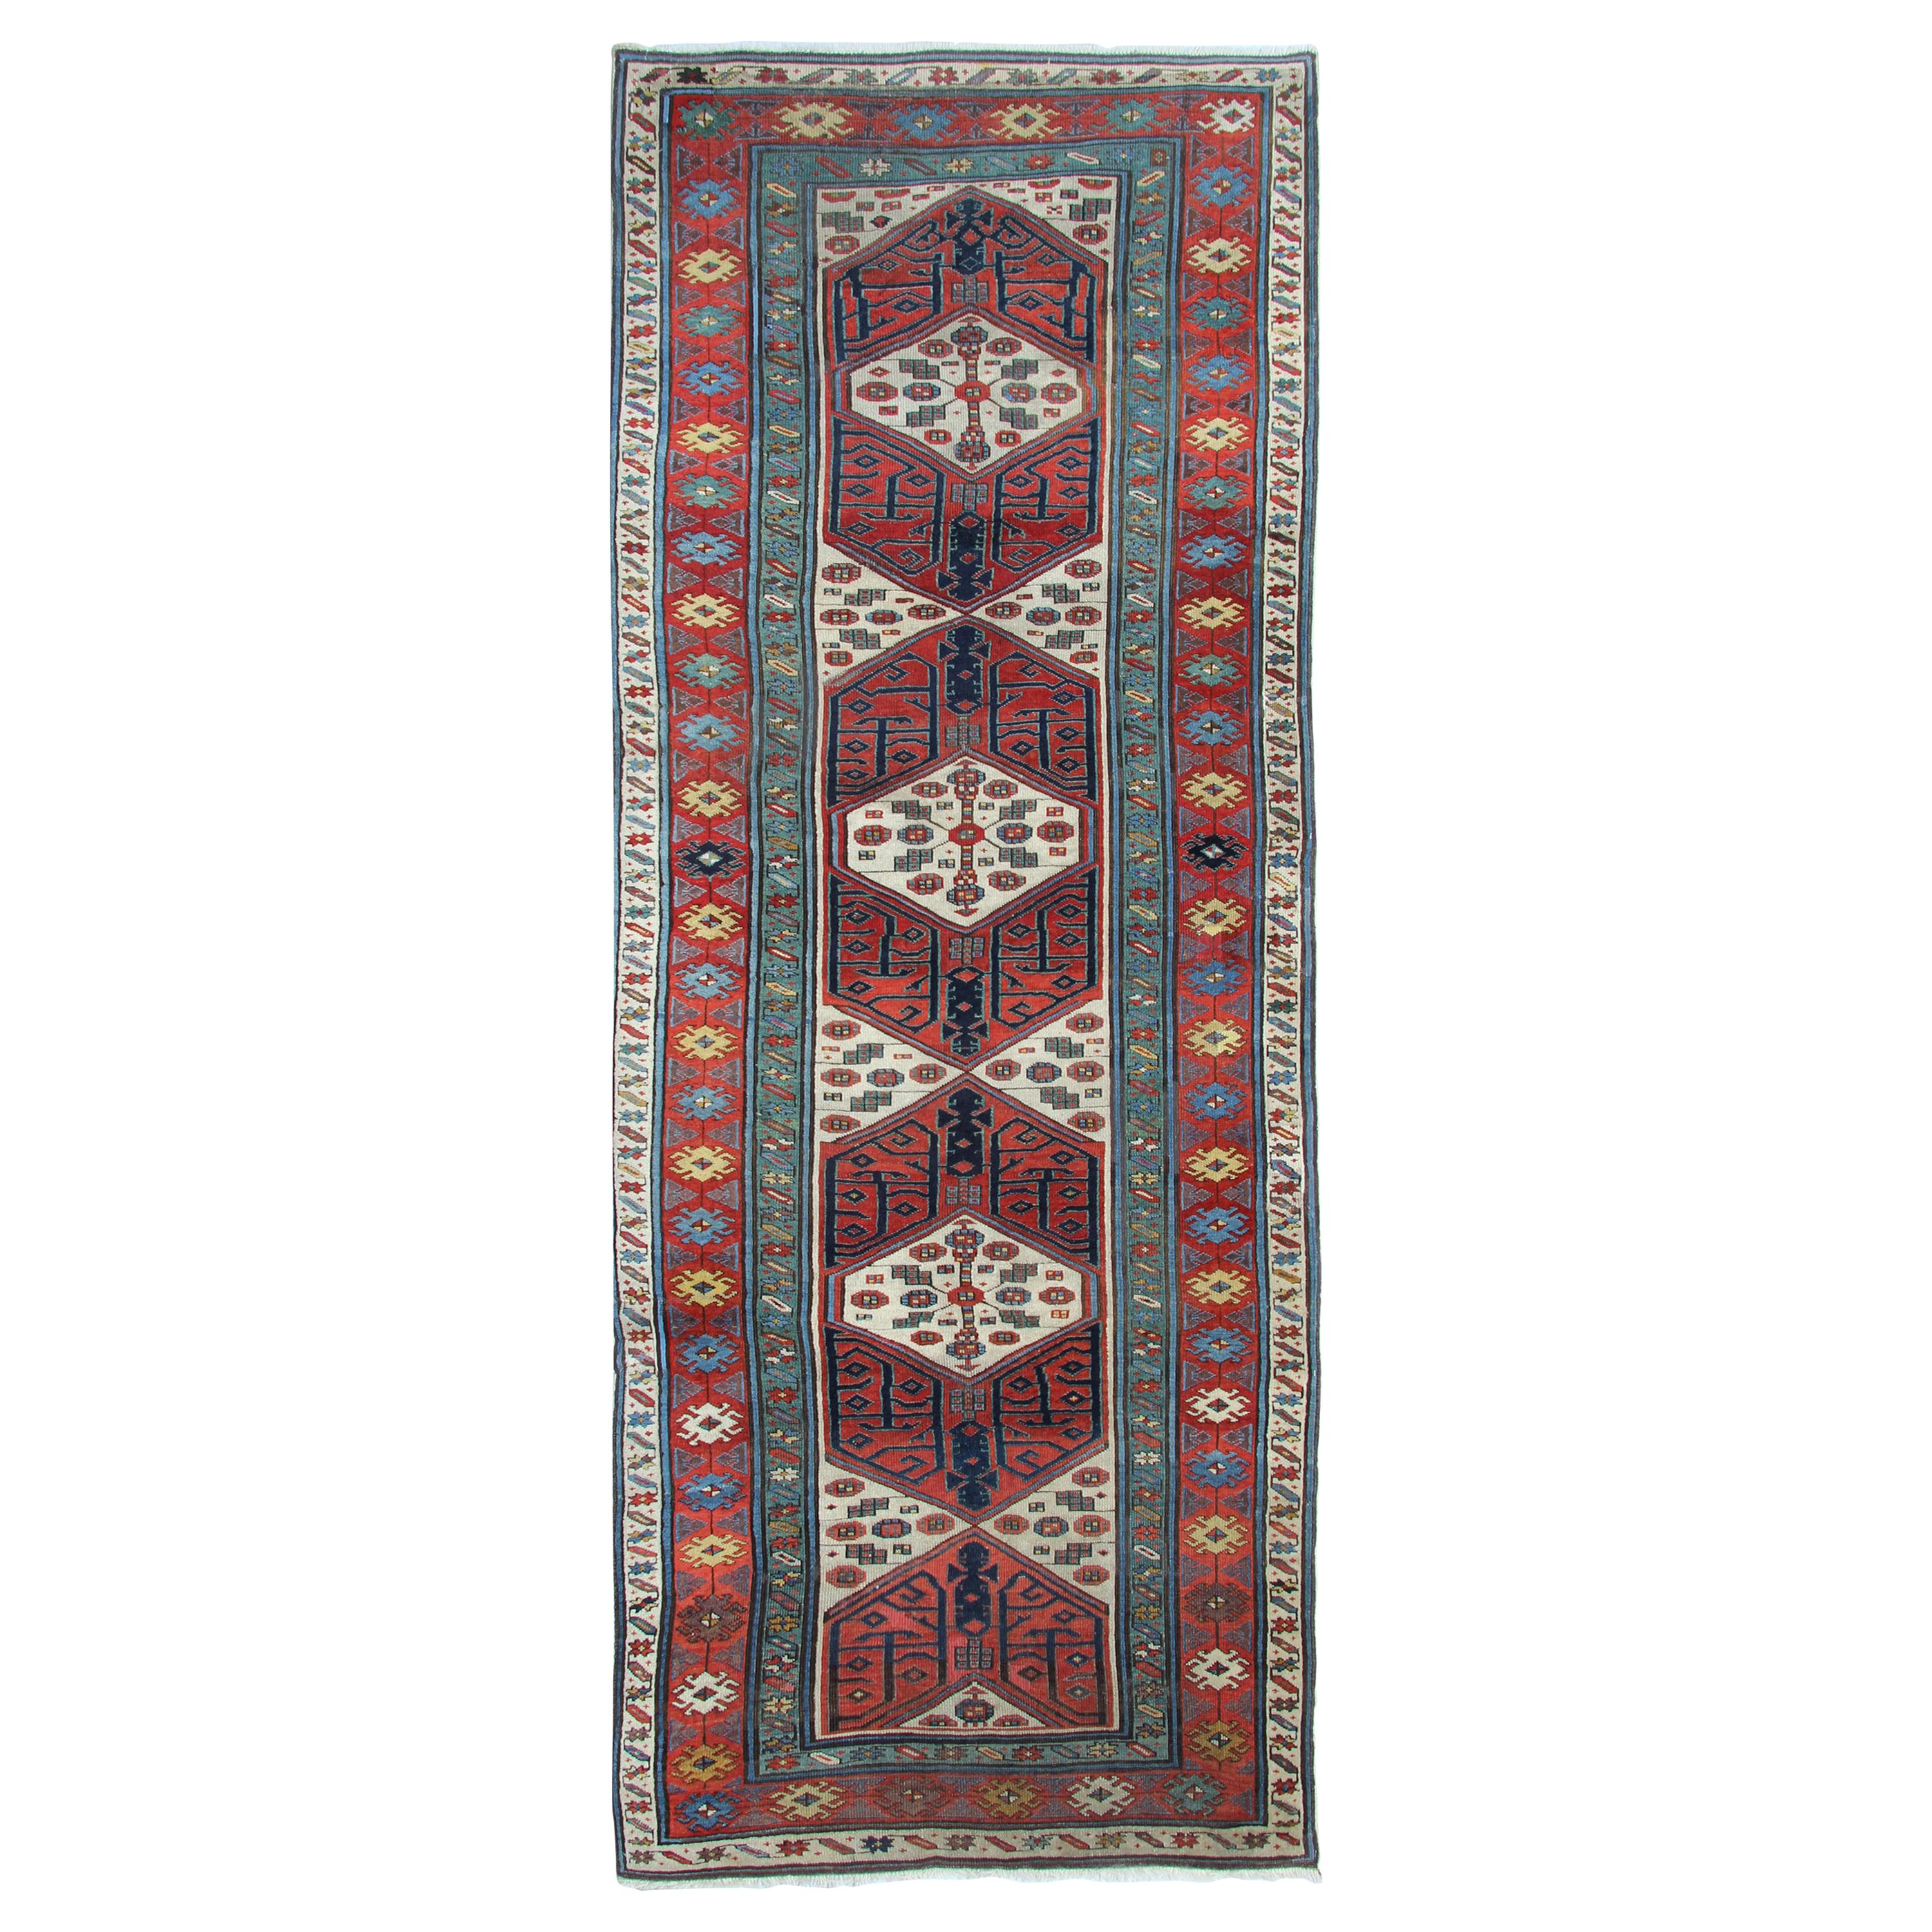 Antique Rugs, Kazak Rug, Handmade Carpet Runner Oriental Rug from Caucasus